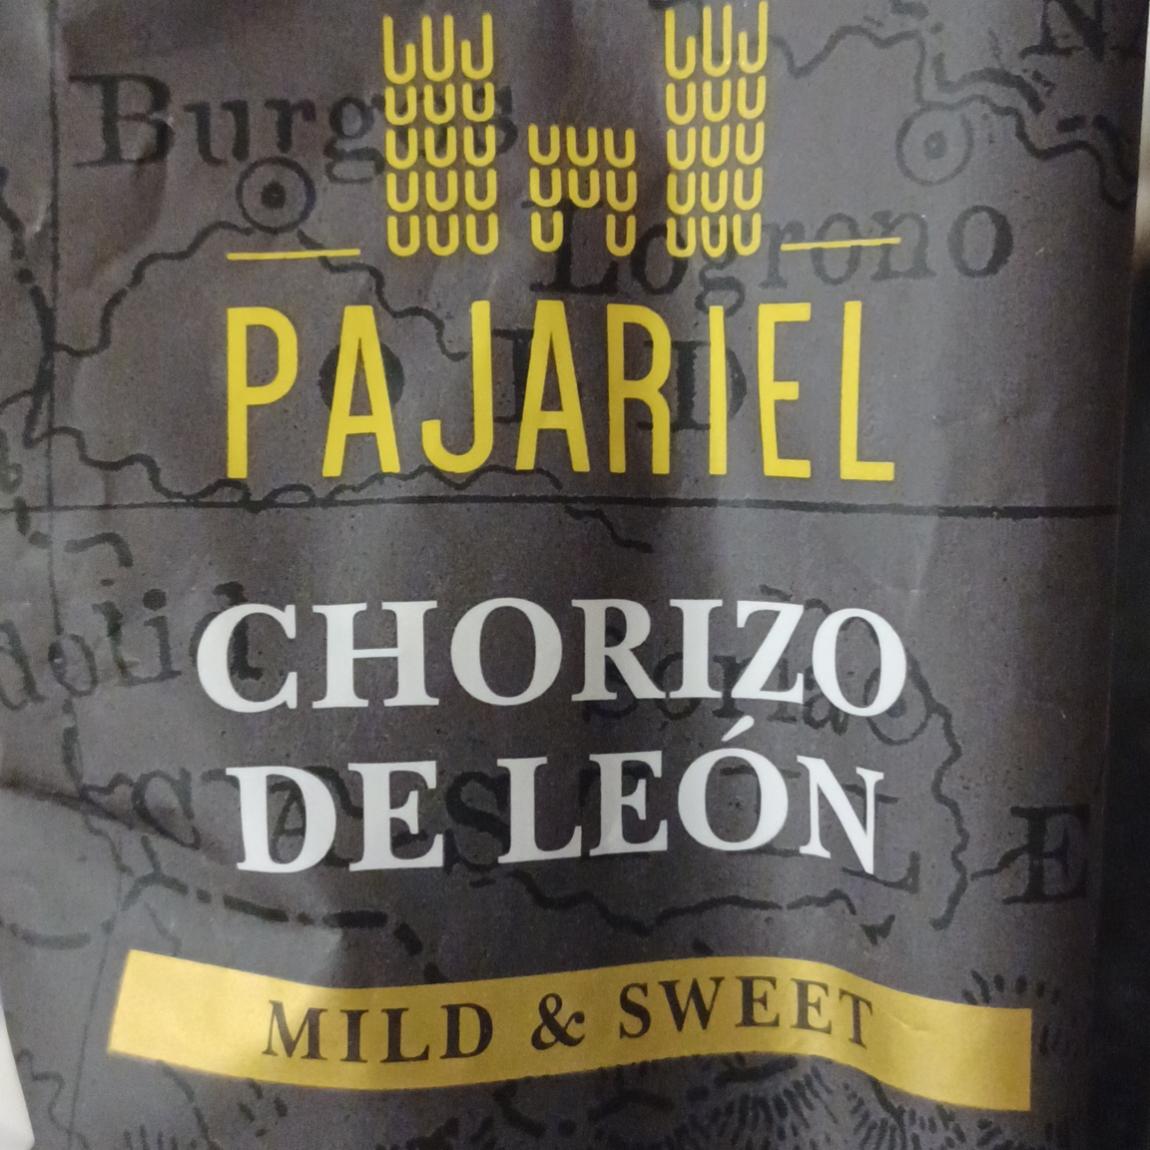 Fotografie - Chorizo de León Mild & Sweet Pajariel